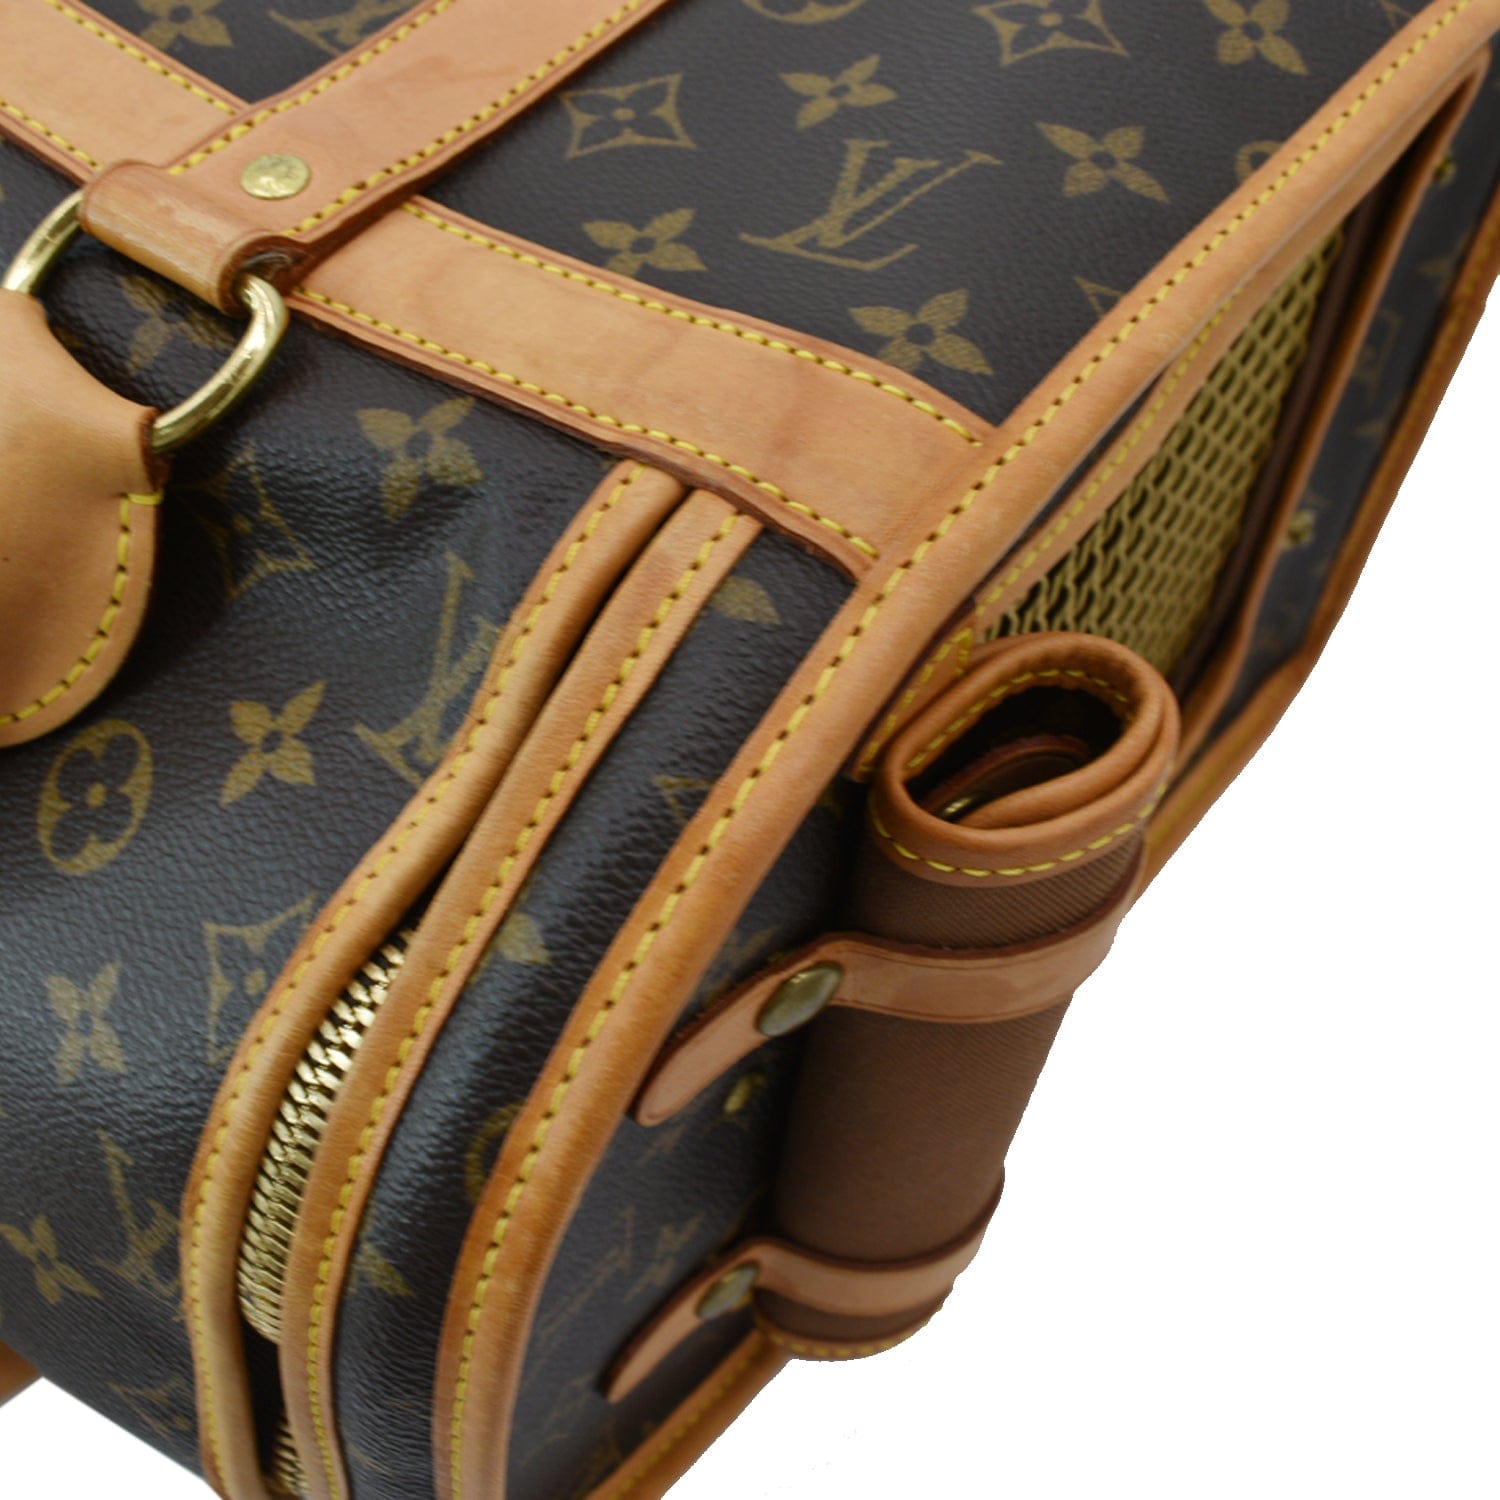 Louis Vuitton Dog Bag, Dog Carrier bag